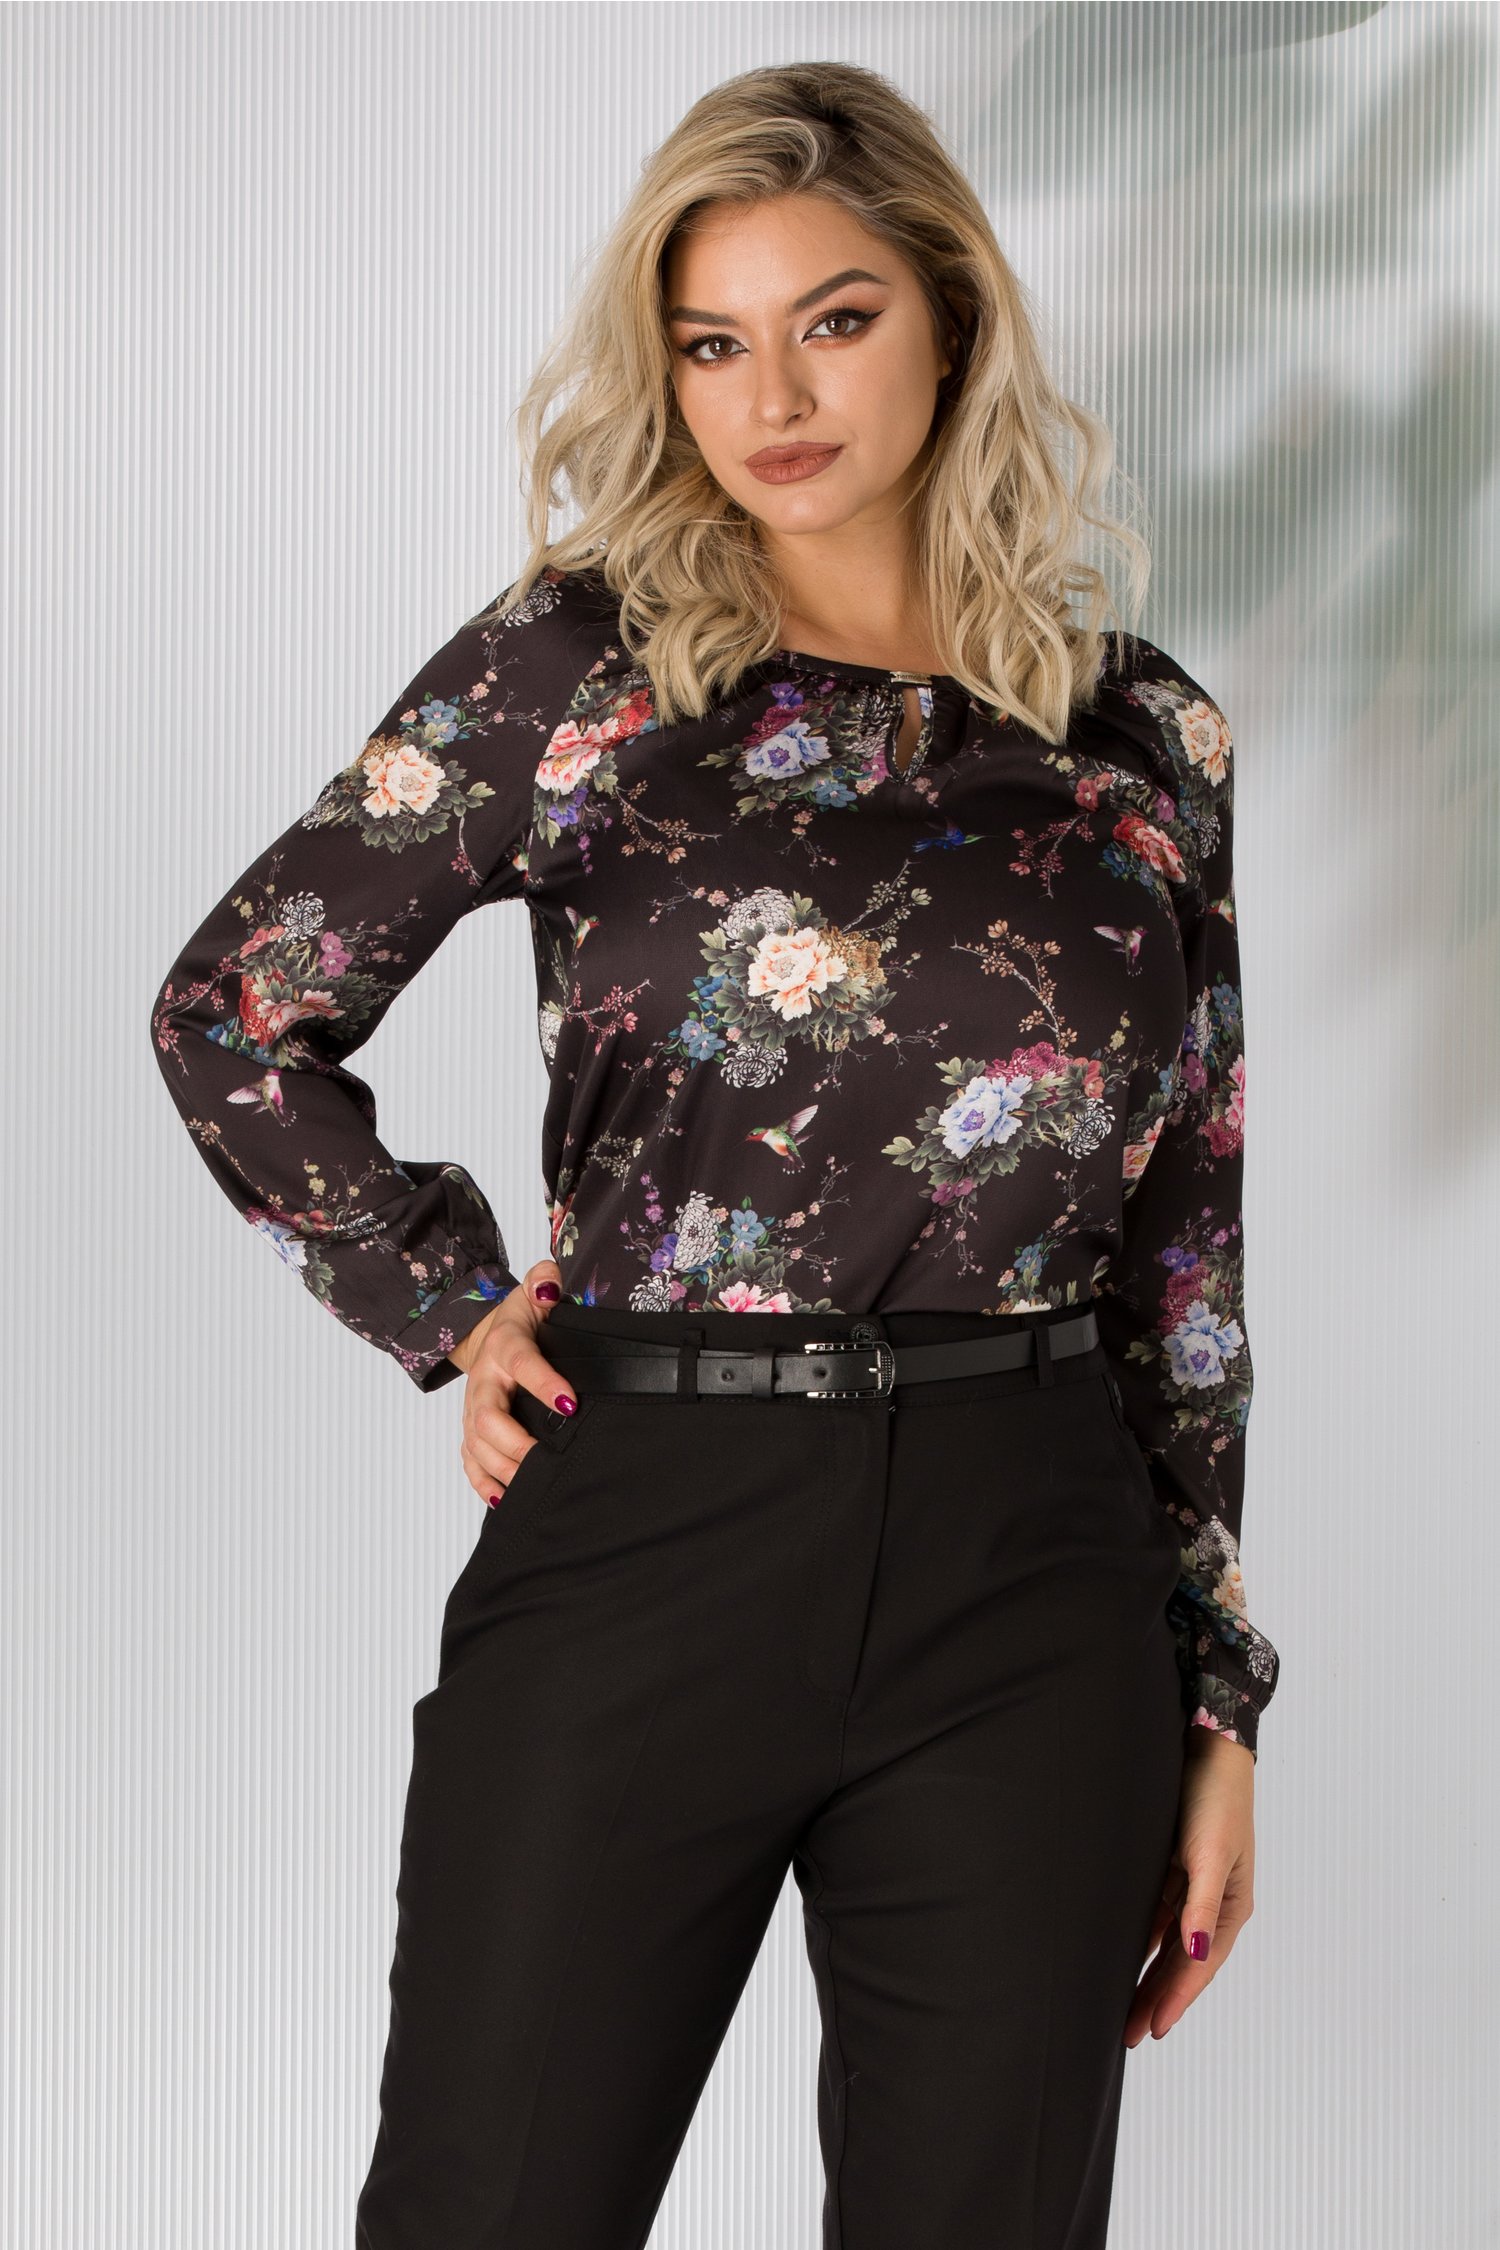 Bluza Veronica neagra cu imprimeu floral pastelat